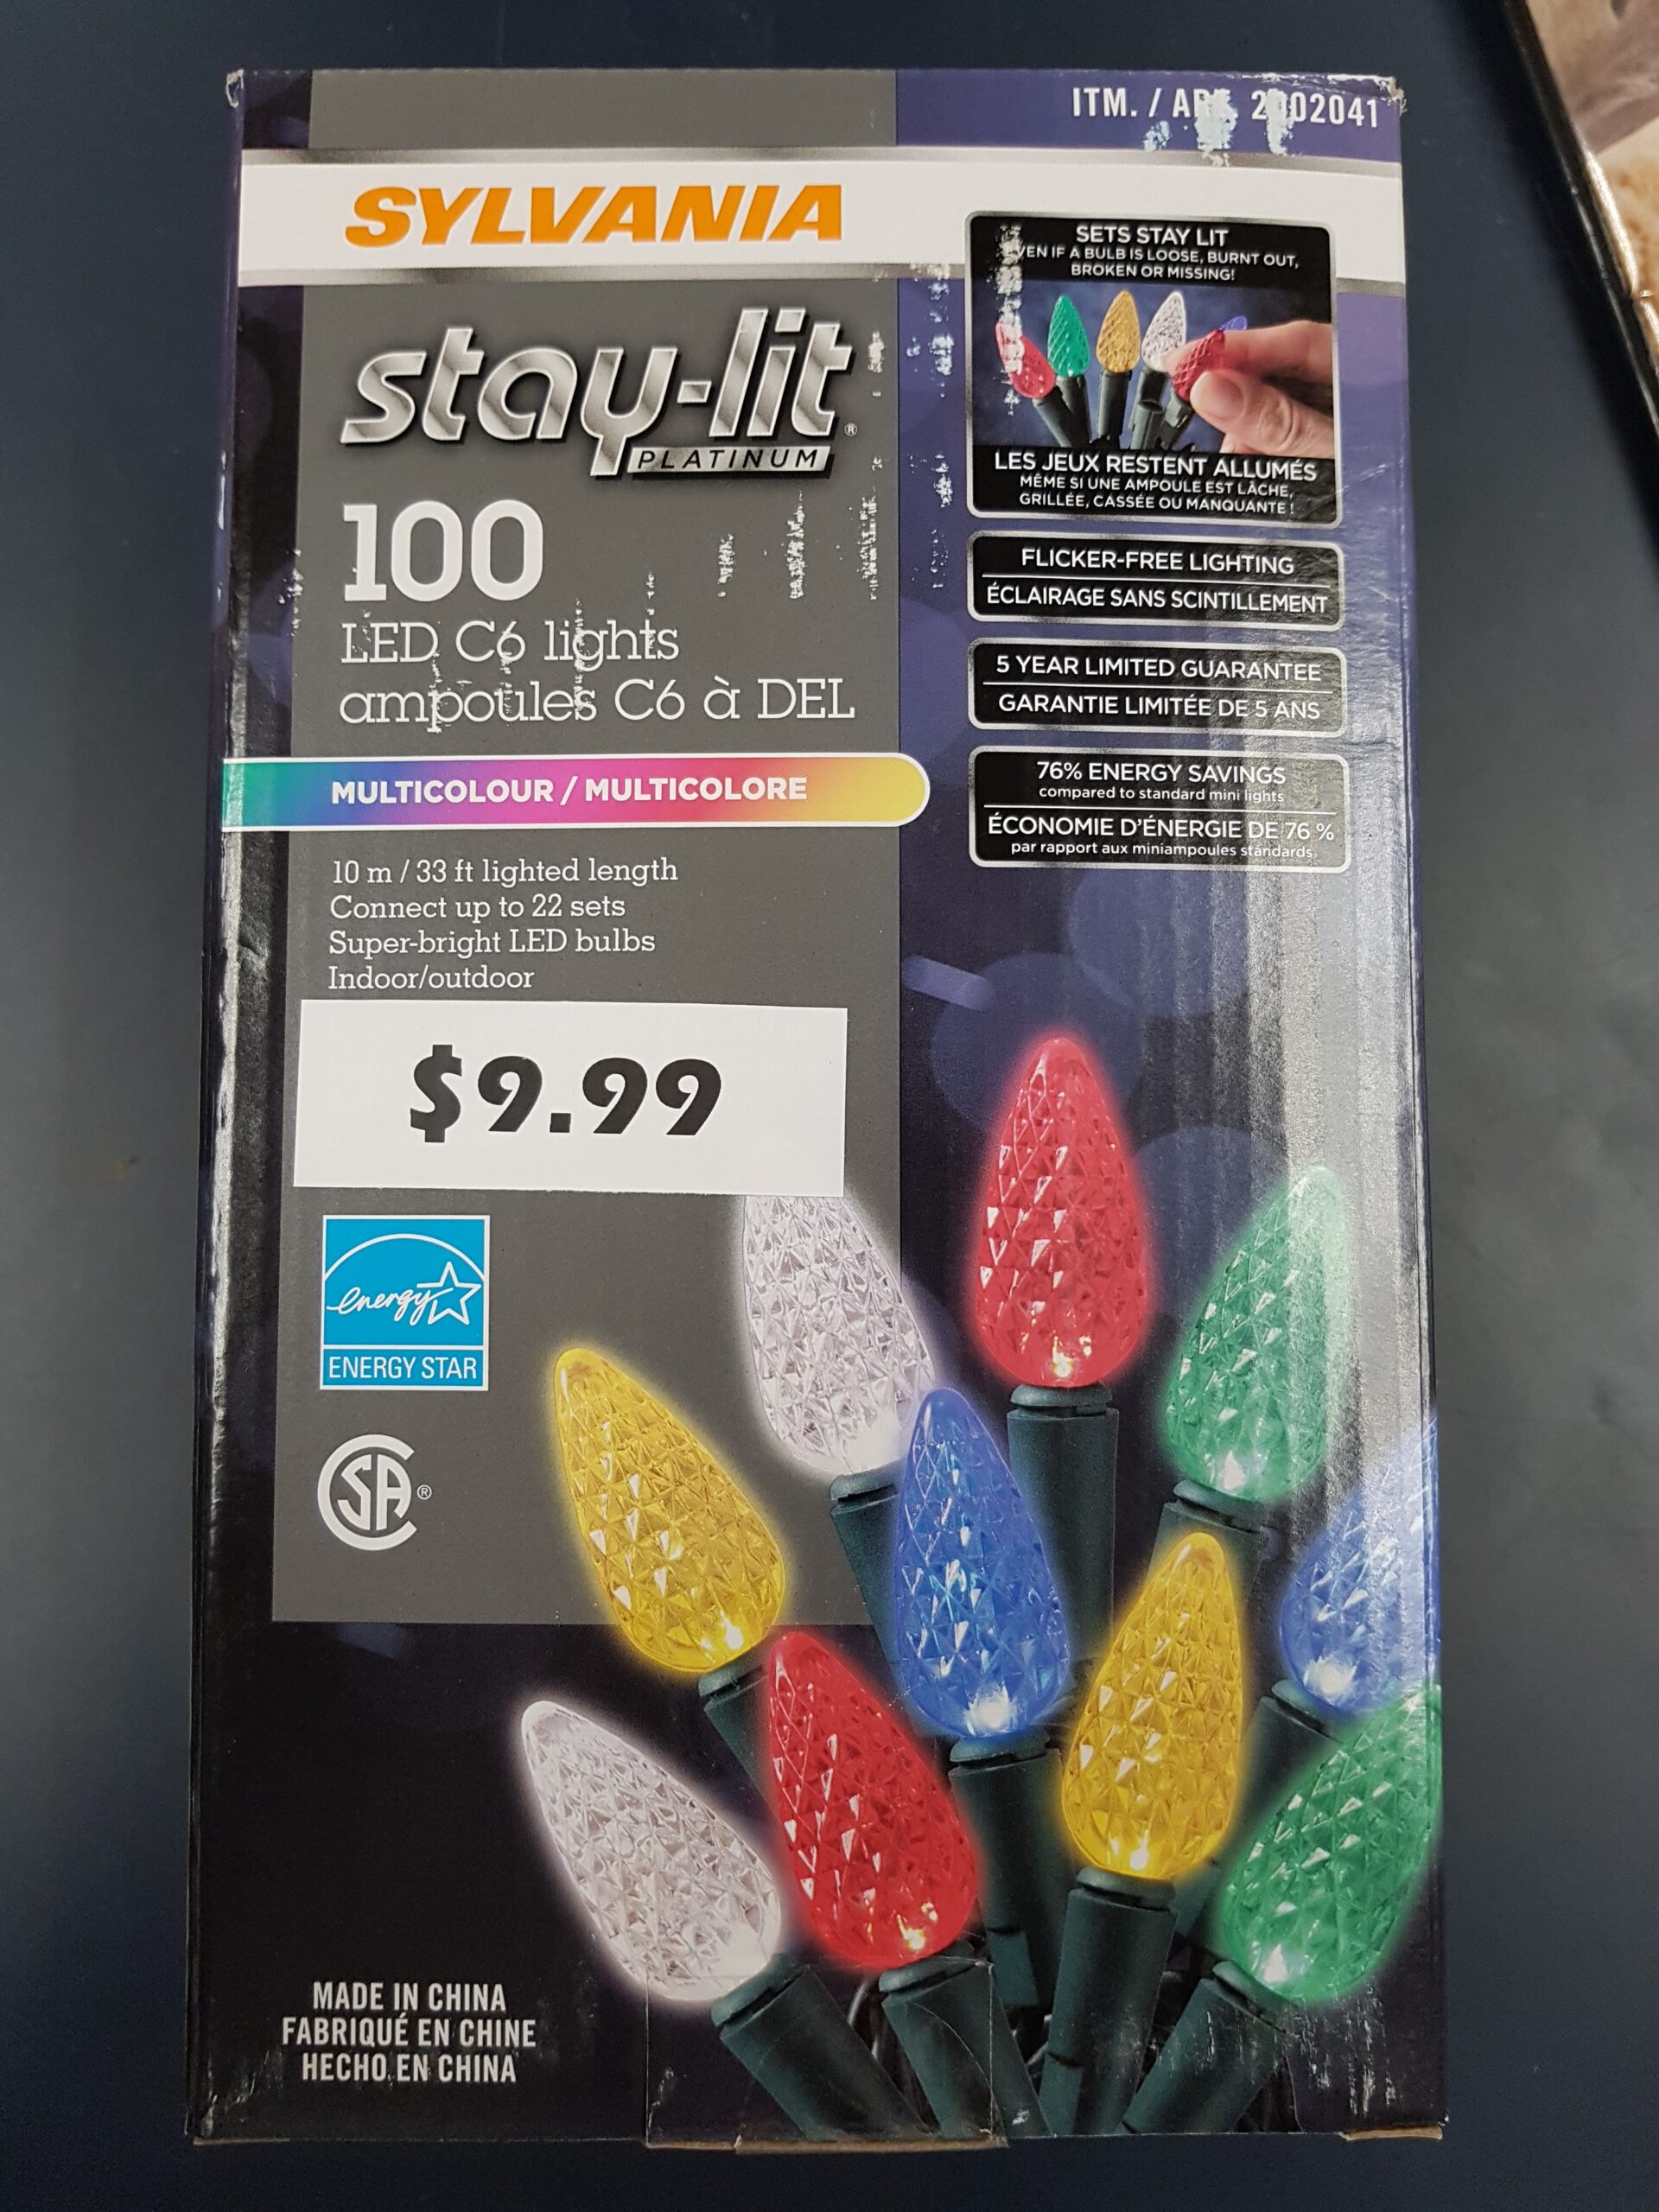 Sylvania Stay Lit Platinum LED C Lights Multicolour StoreWithaDoor Com